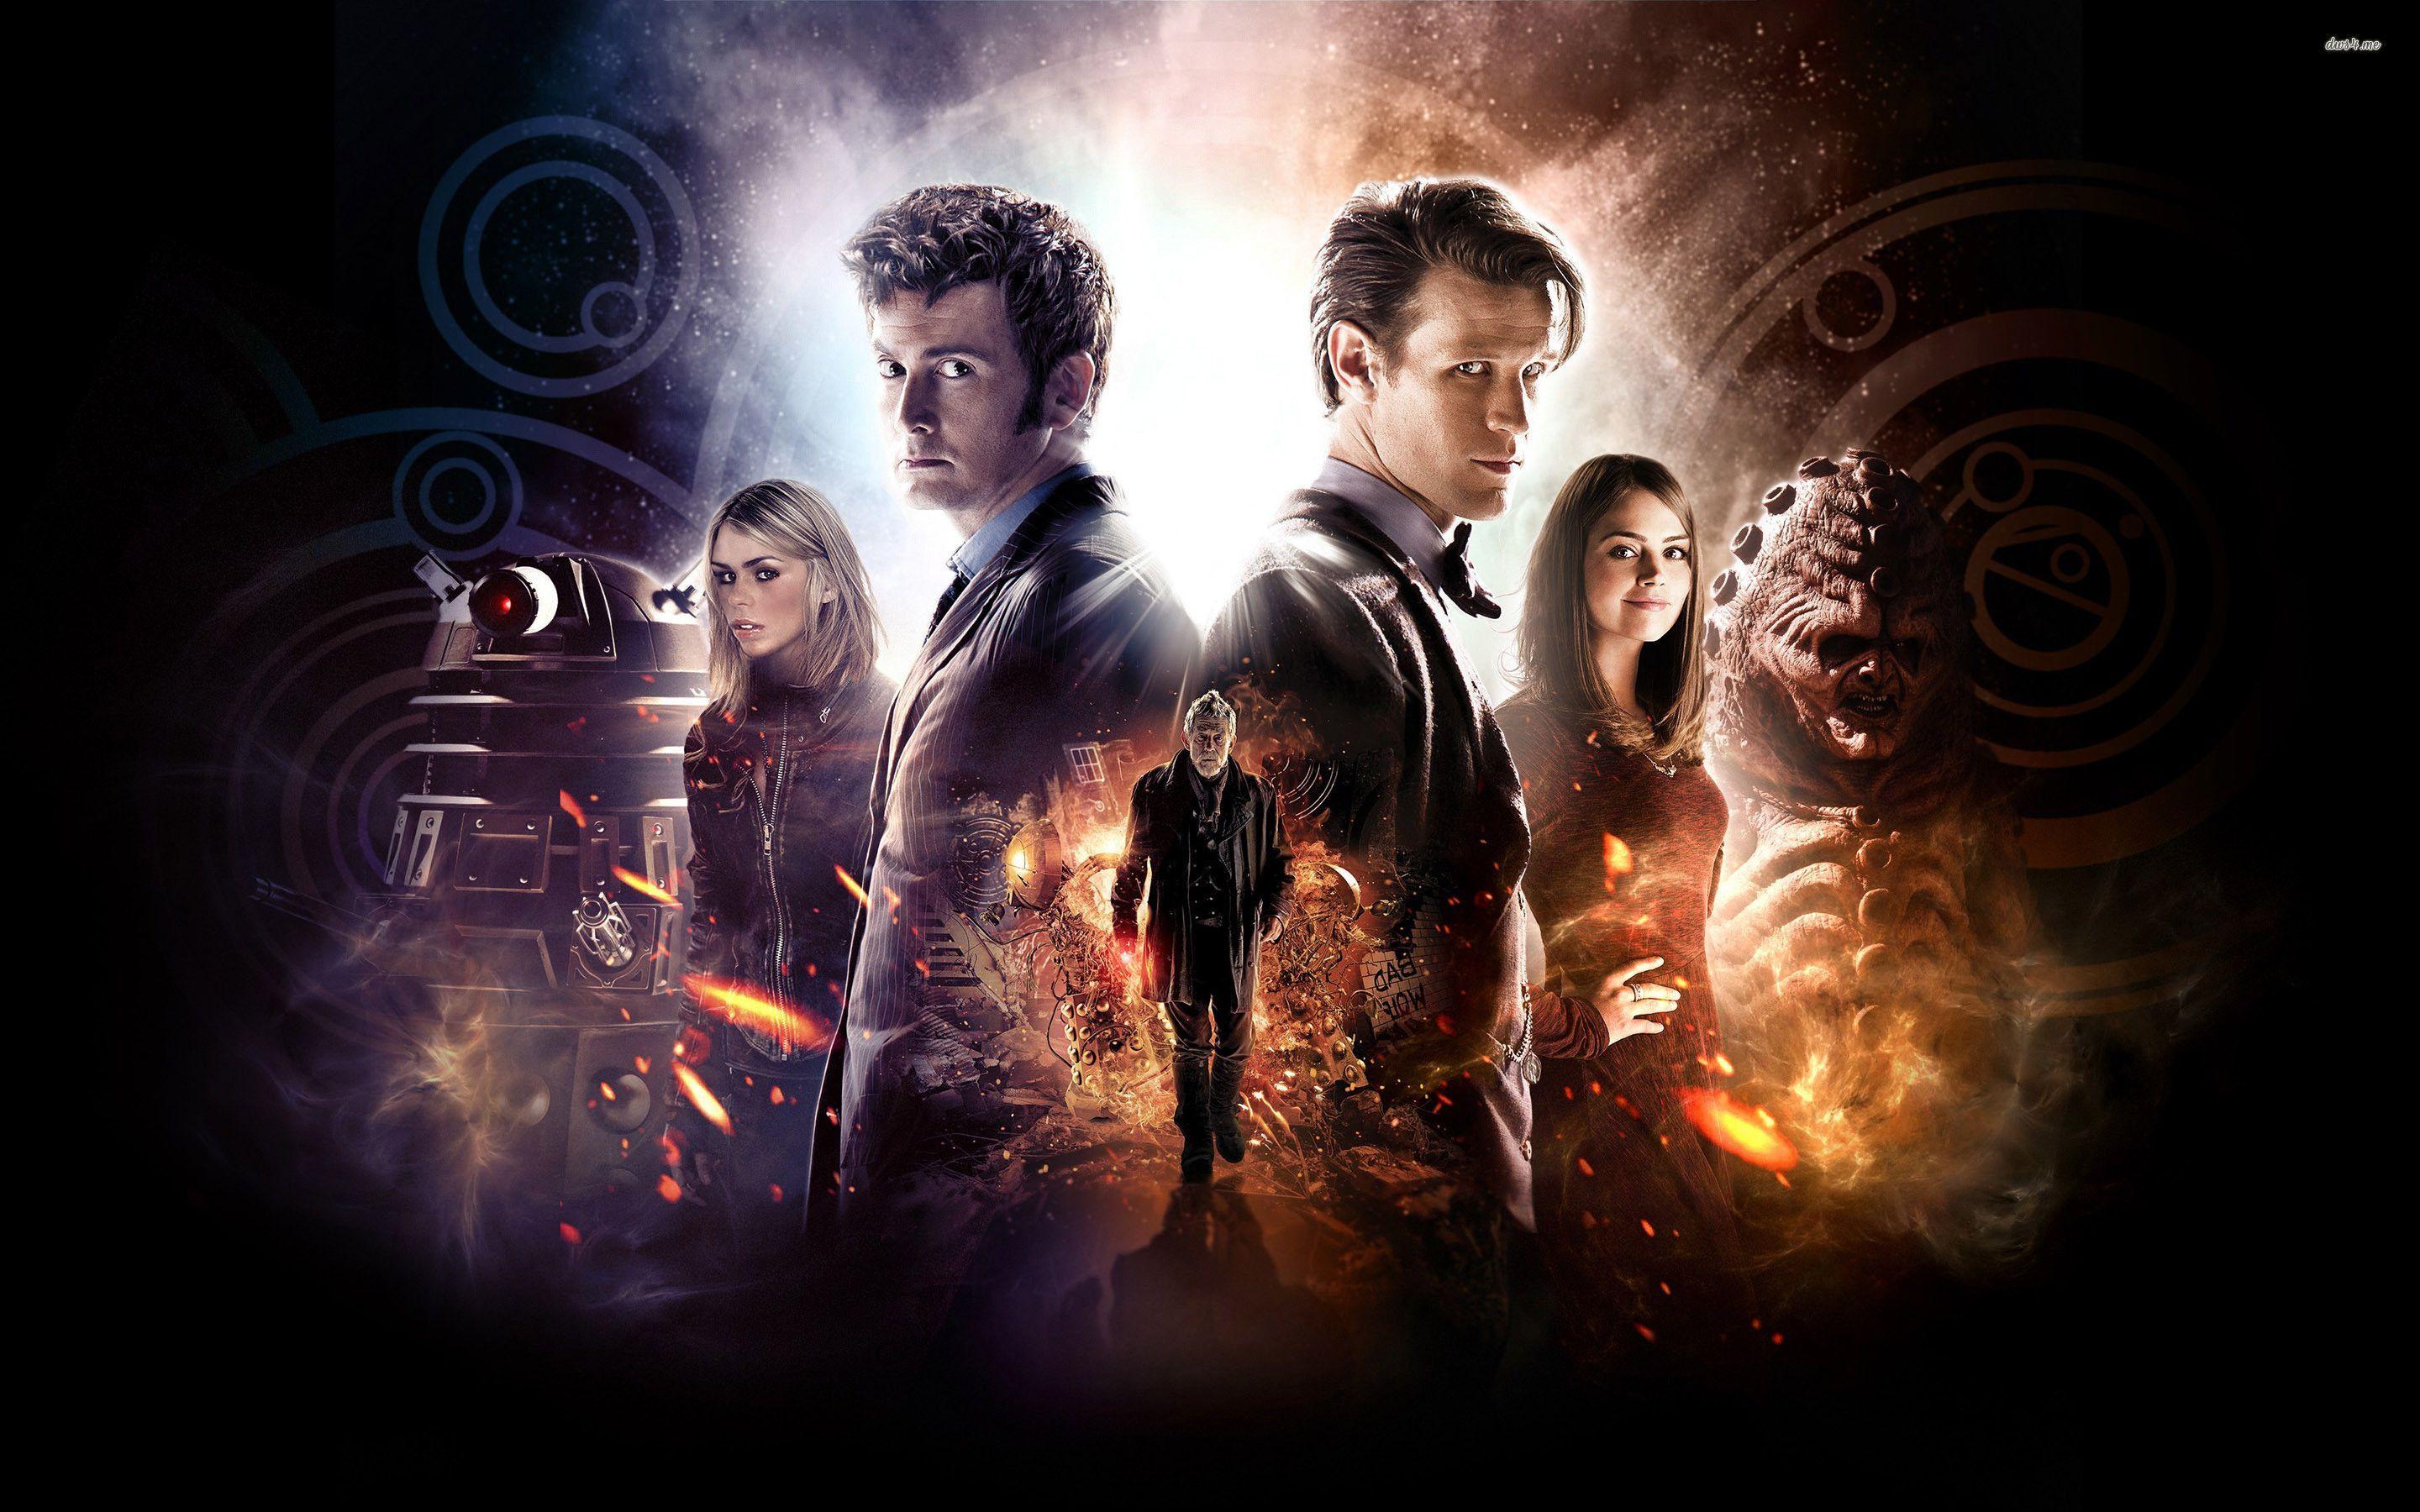 Doctor Who Pics, Anita Gaitan for mobile and desktop